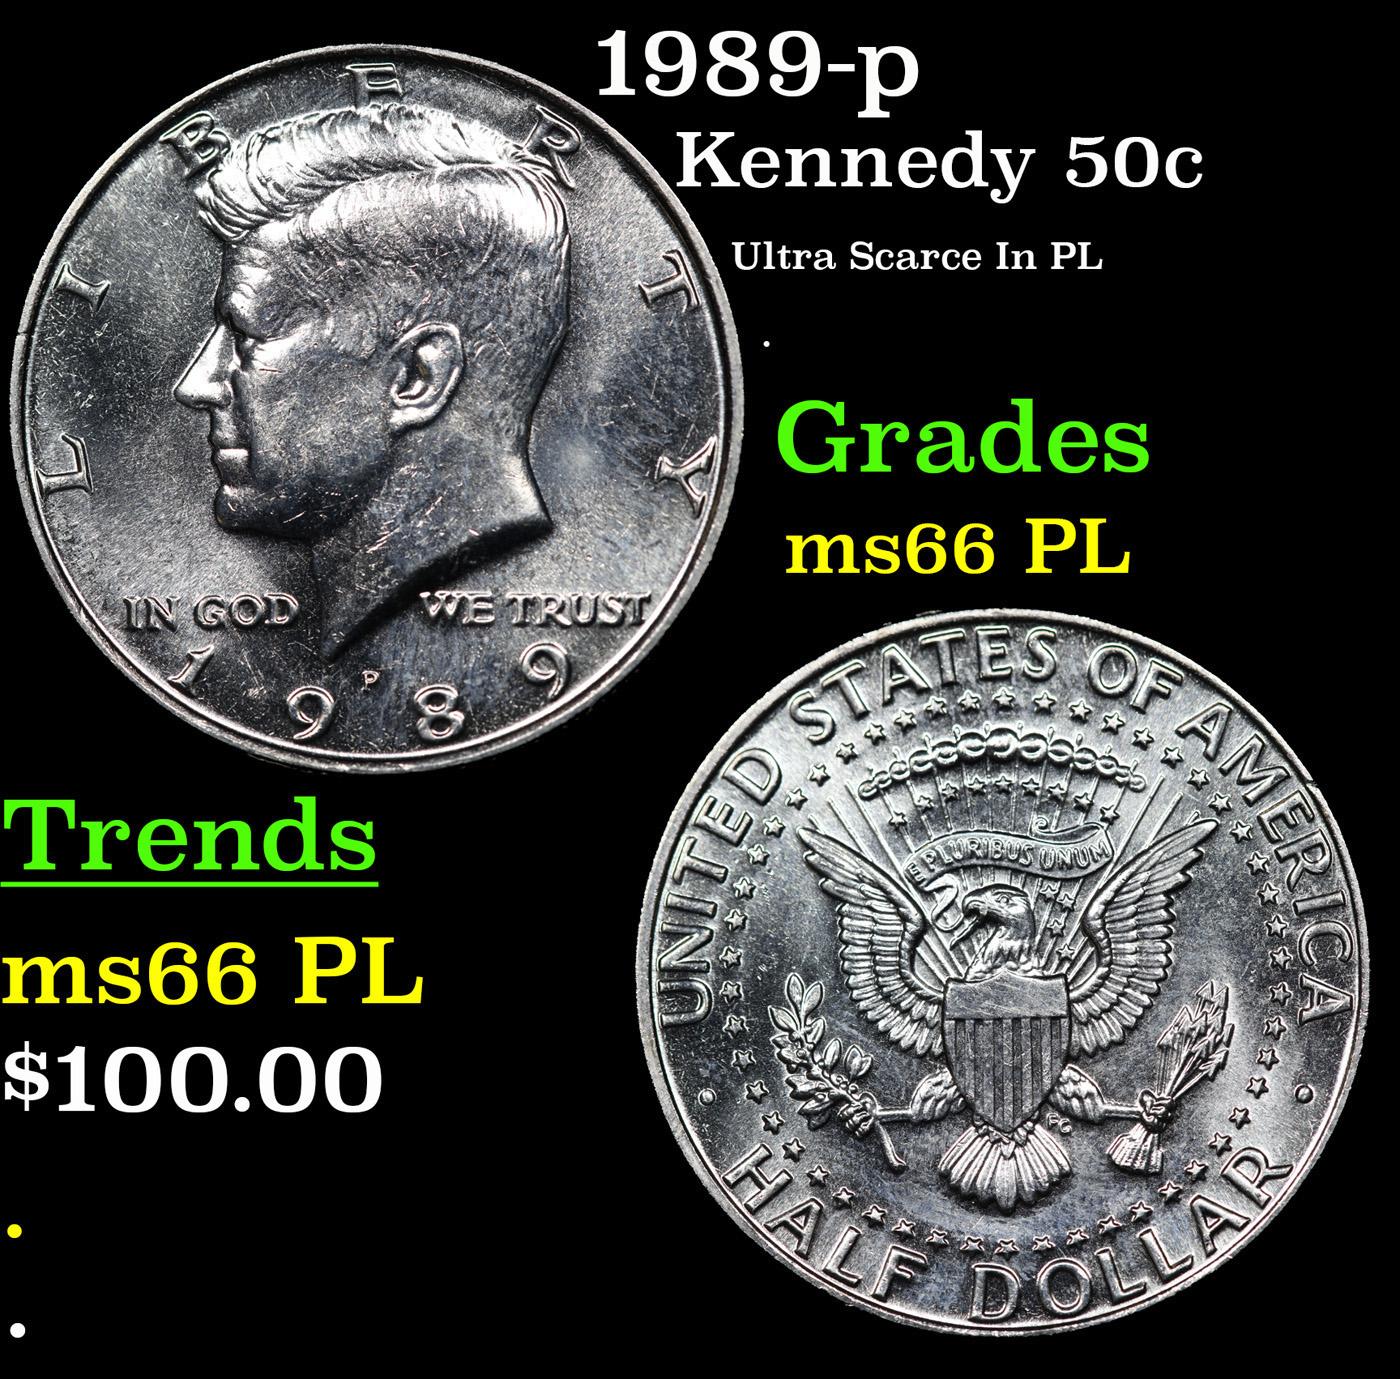 1989-p Kennedy Half Dollar 50c Grades GEM+ UNC PL